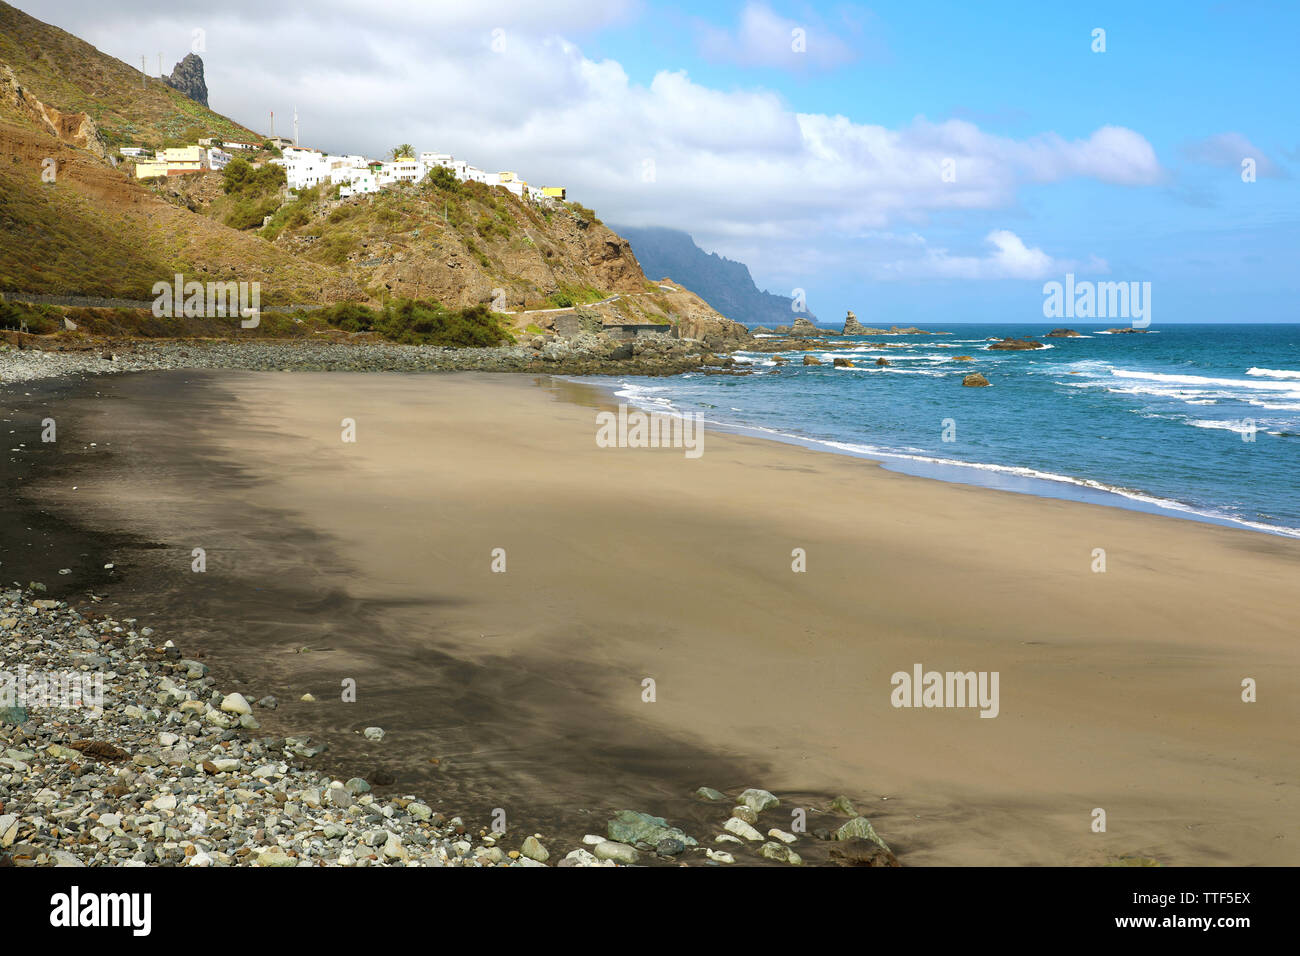 Playa de Almaciga beautiful beach with black sand with the village of Almaciga on the hill, Tenerife, Spain Stock Photo